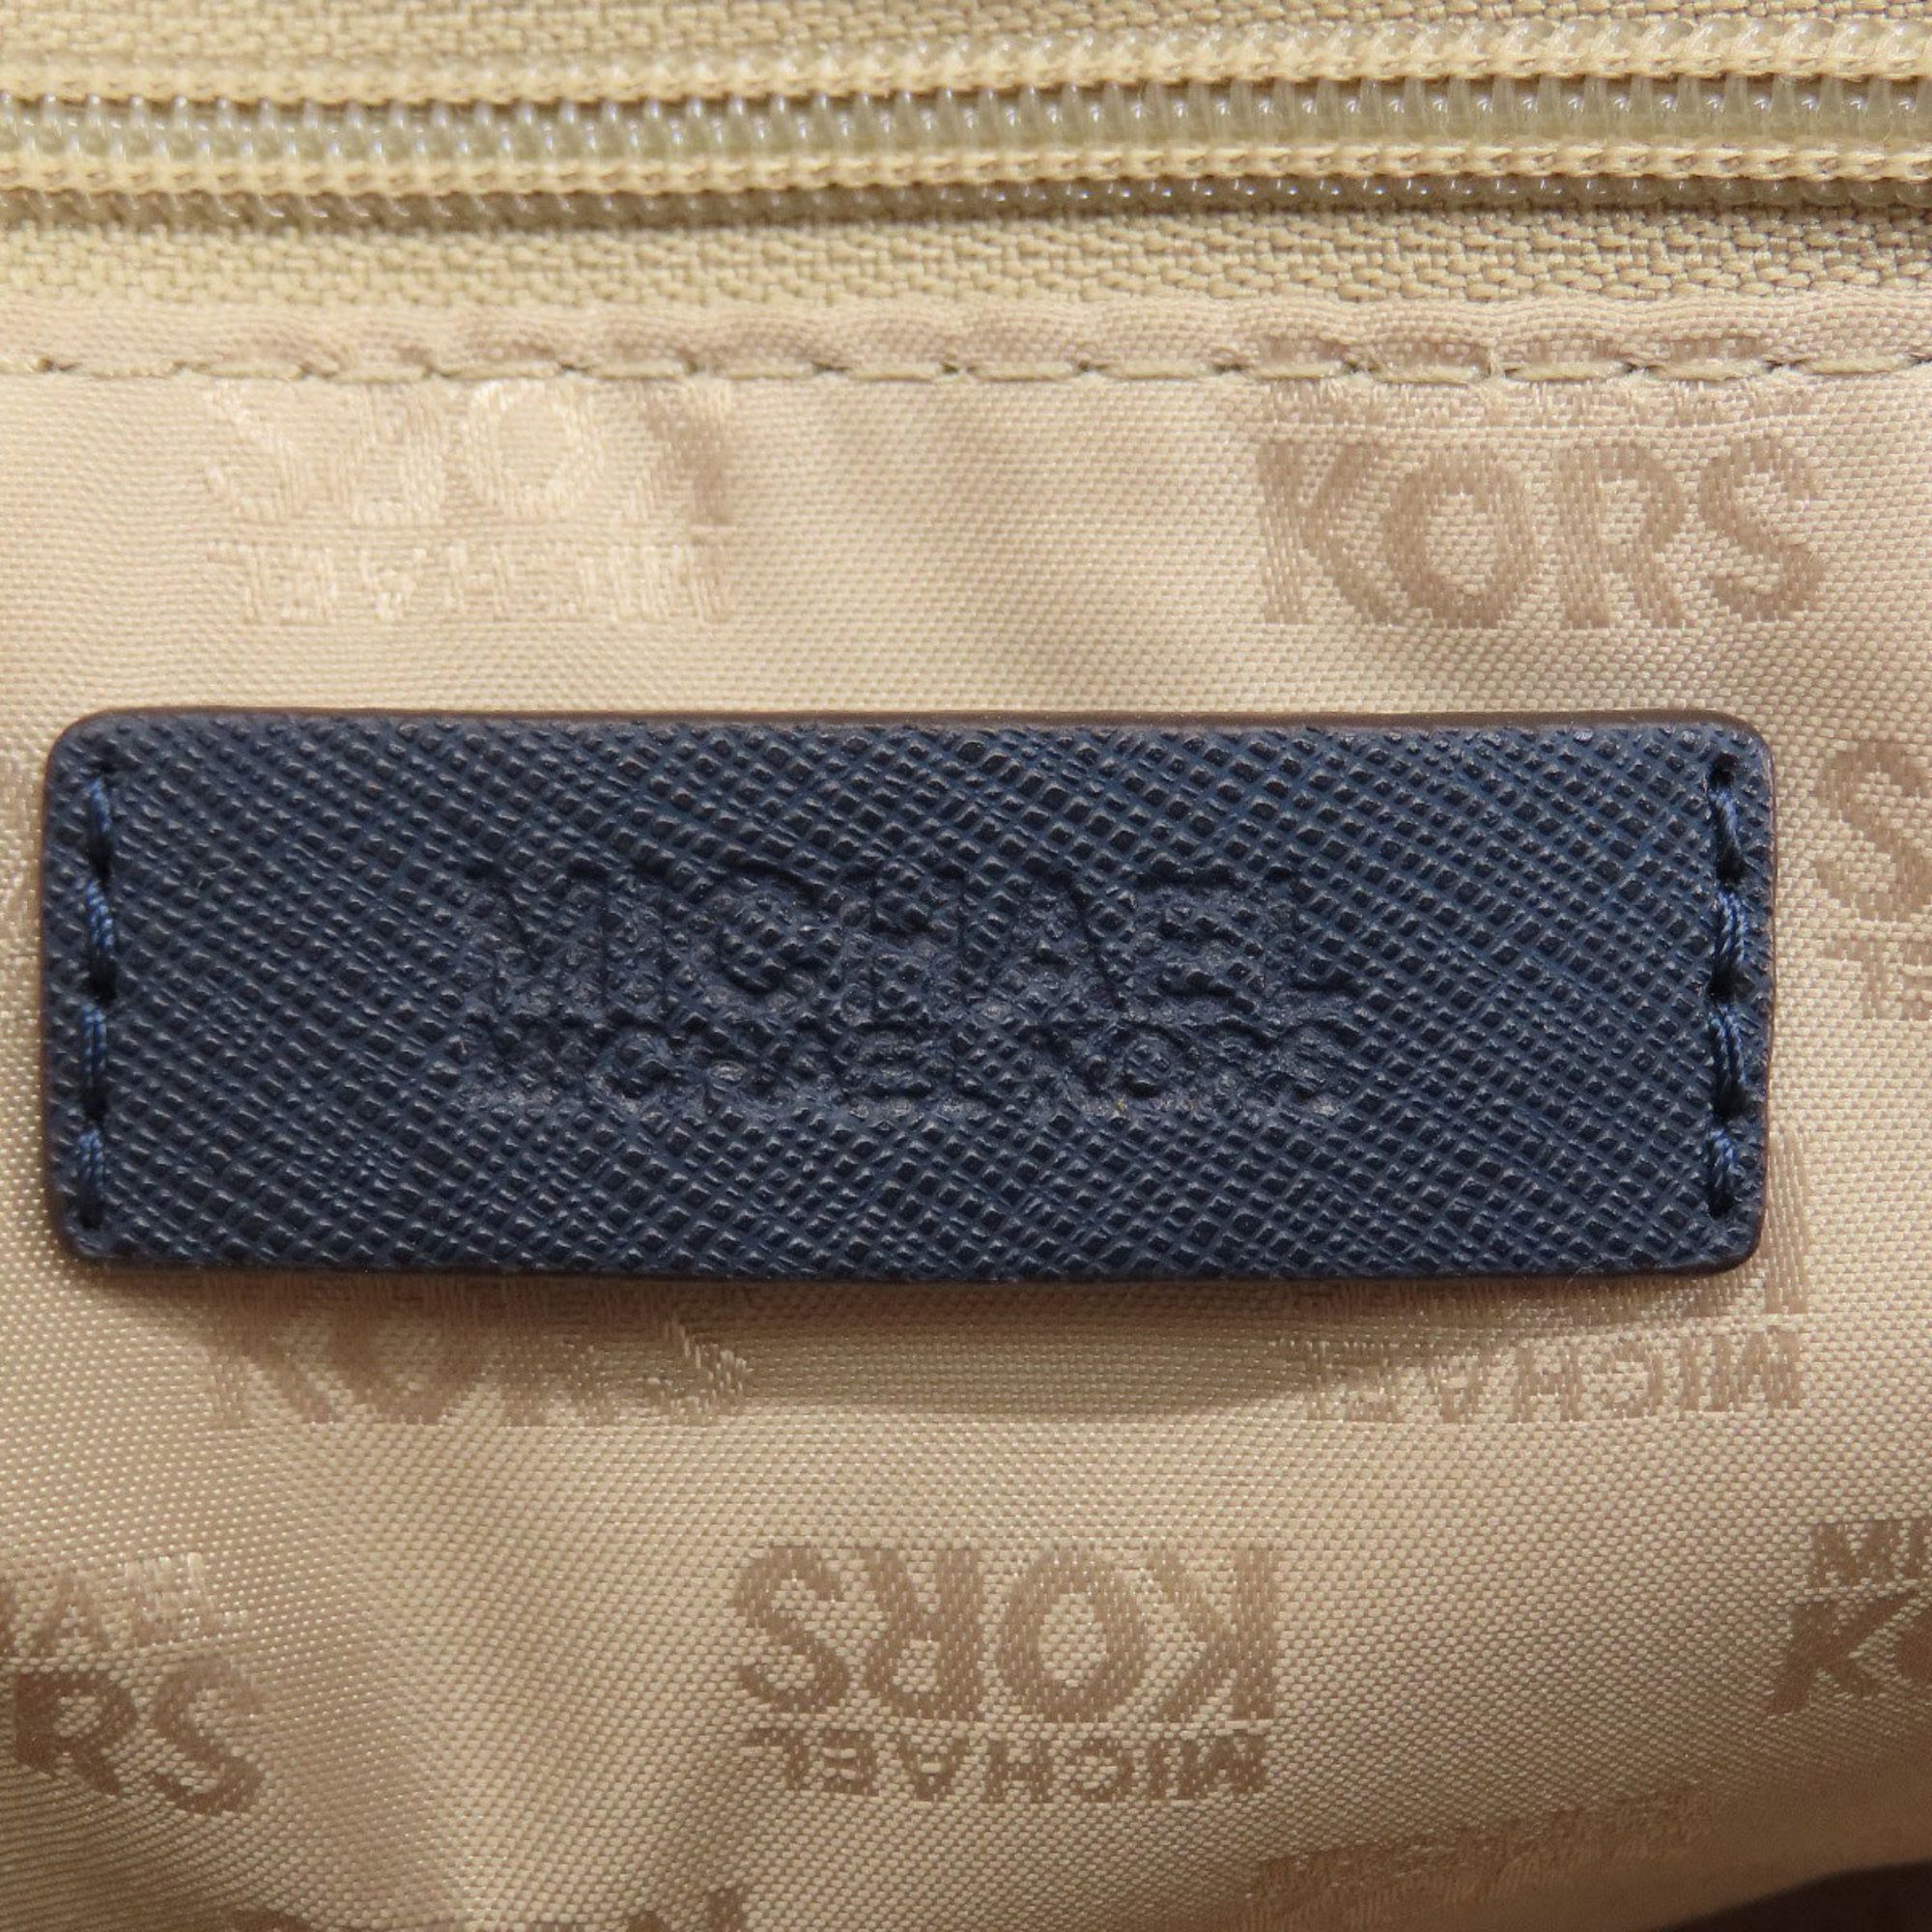 Michael Kors handbag leather women's